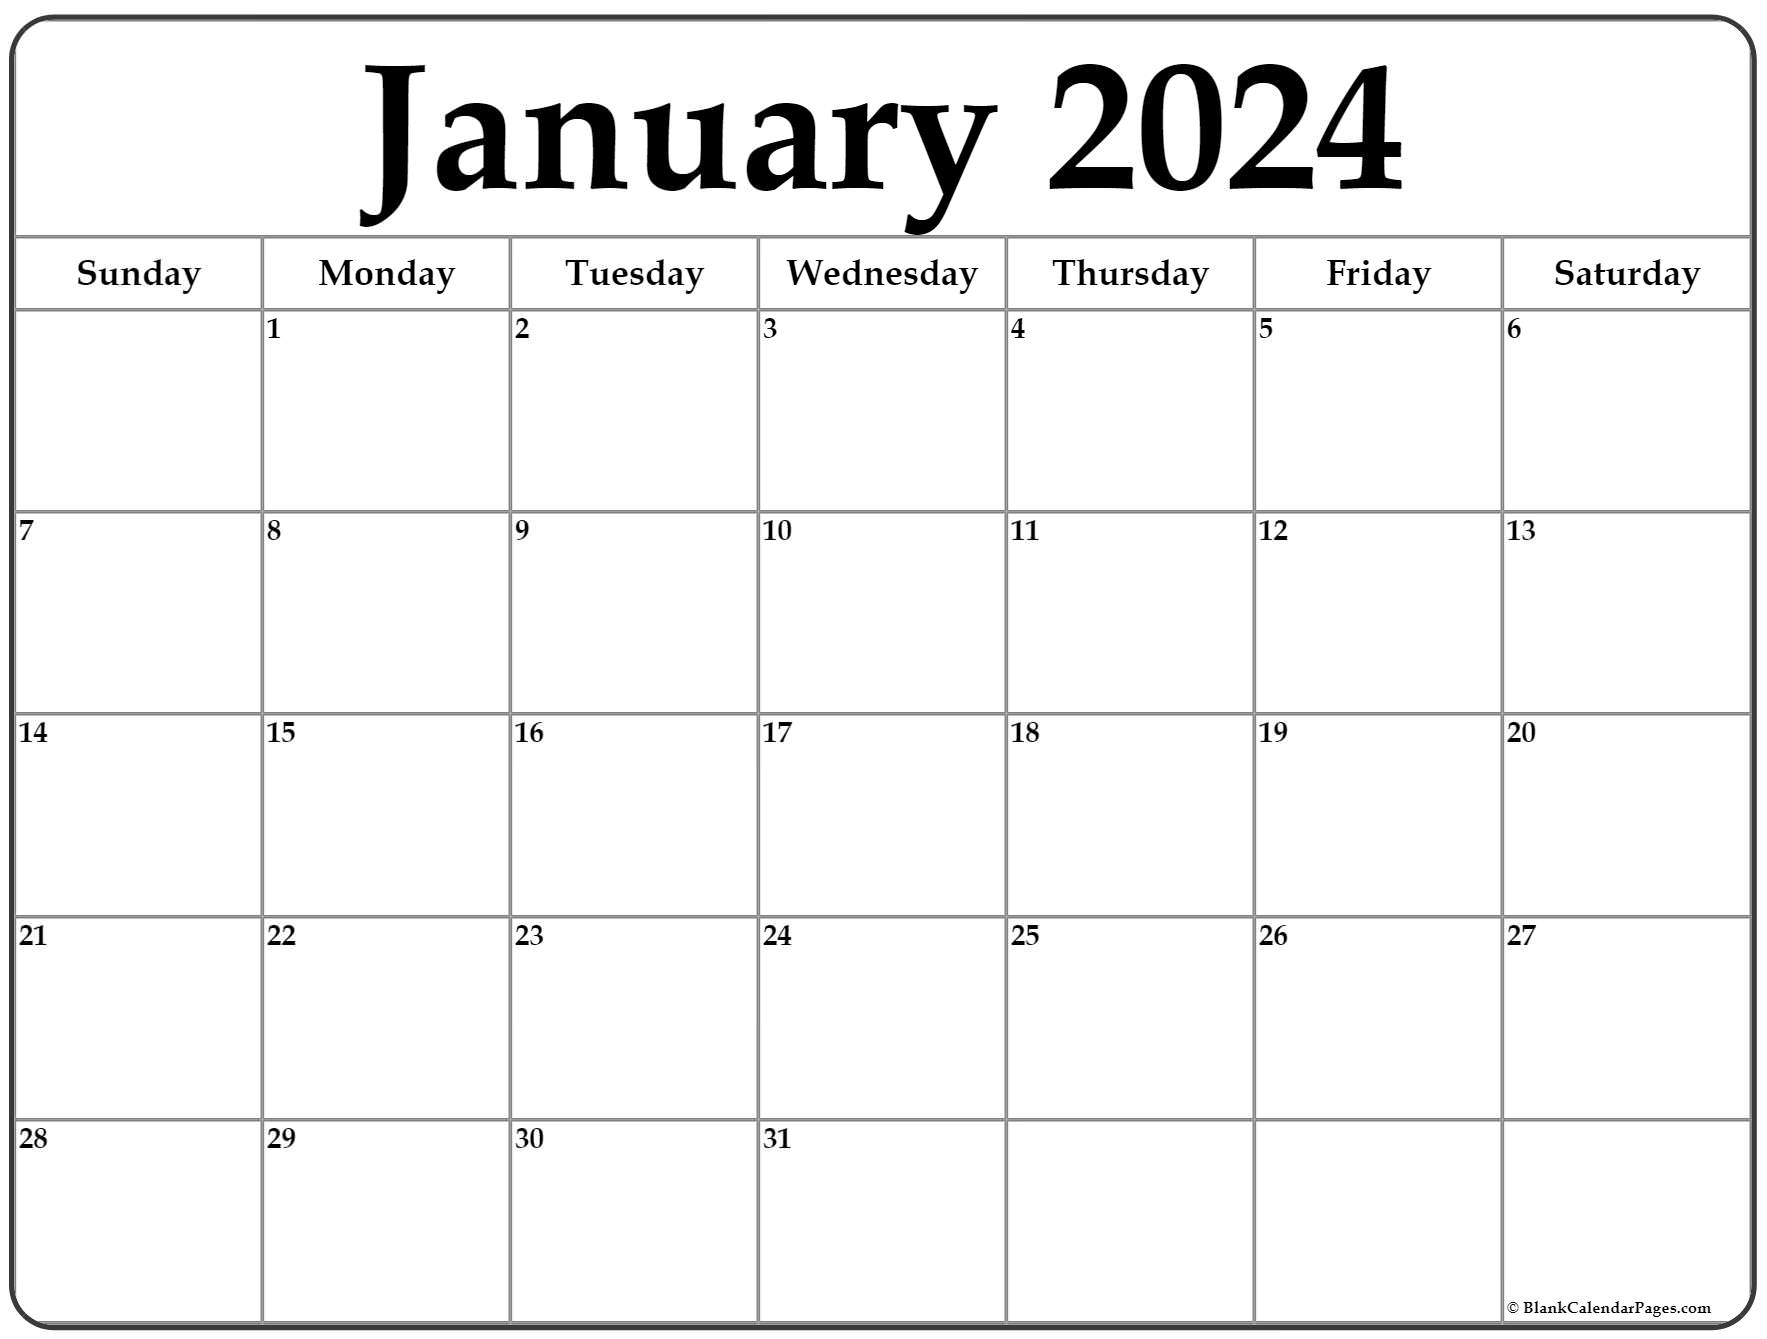 January 2024 Calendar | Free Printable Calendar | Printable Calendar 2024 Free Monthly